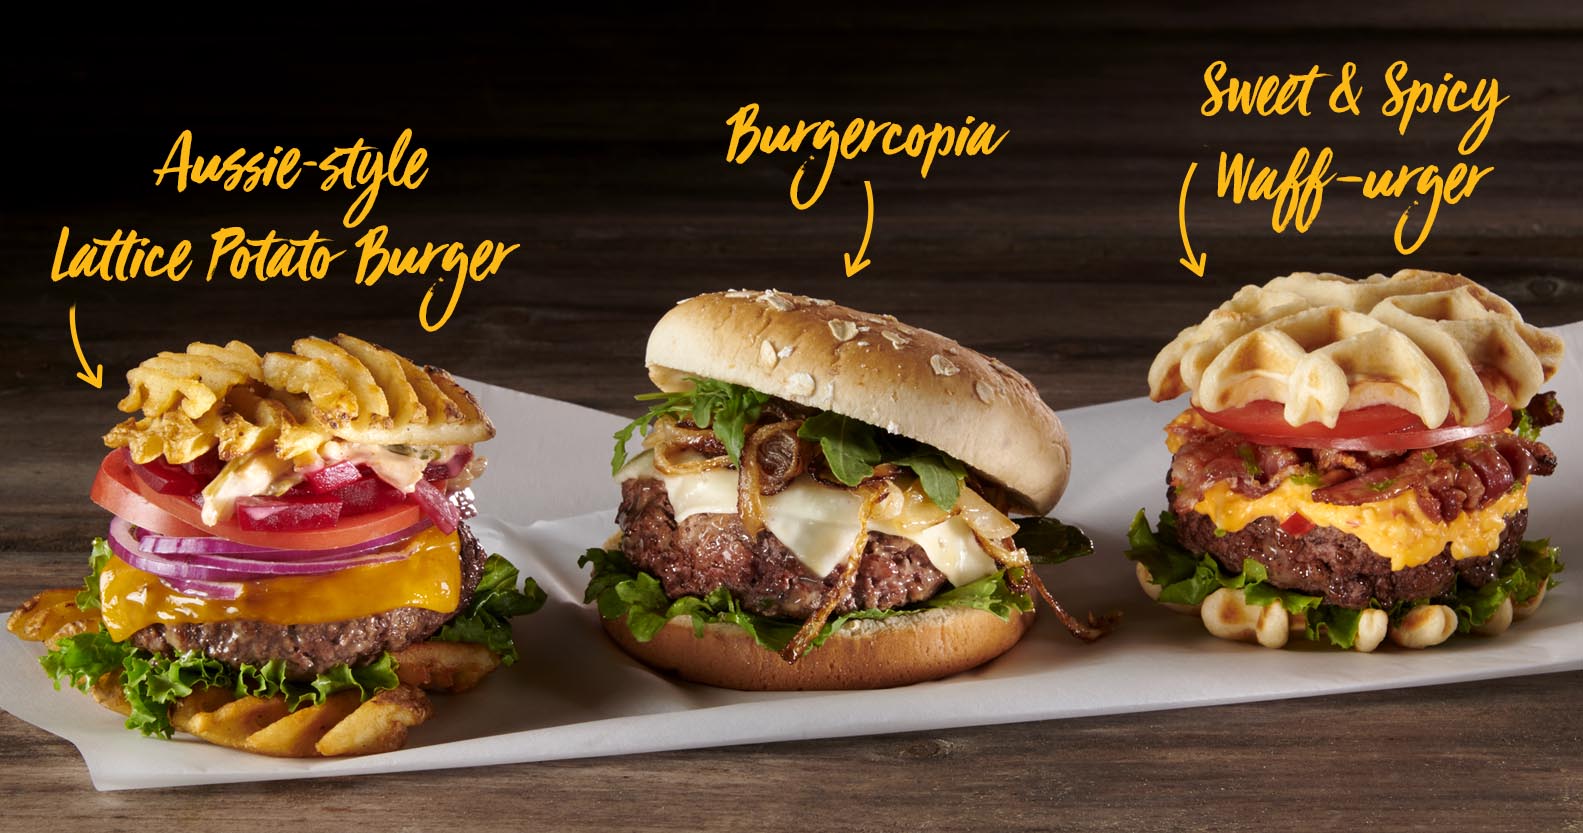 Three burgers: Aussie-Style Lattice Potato Burger